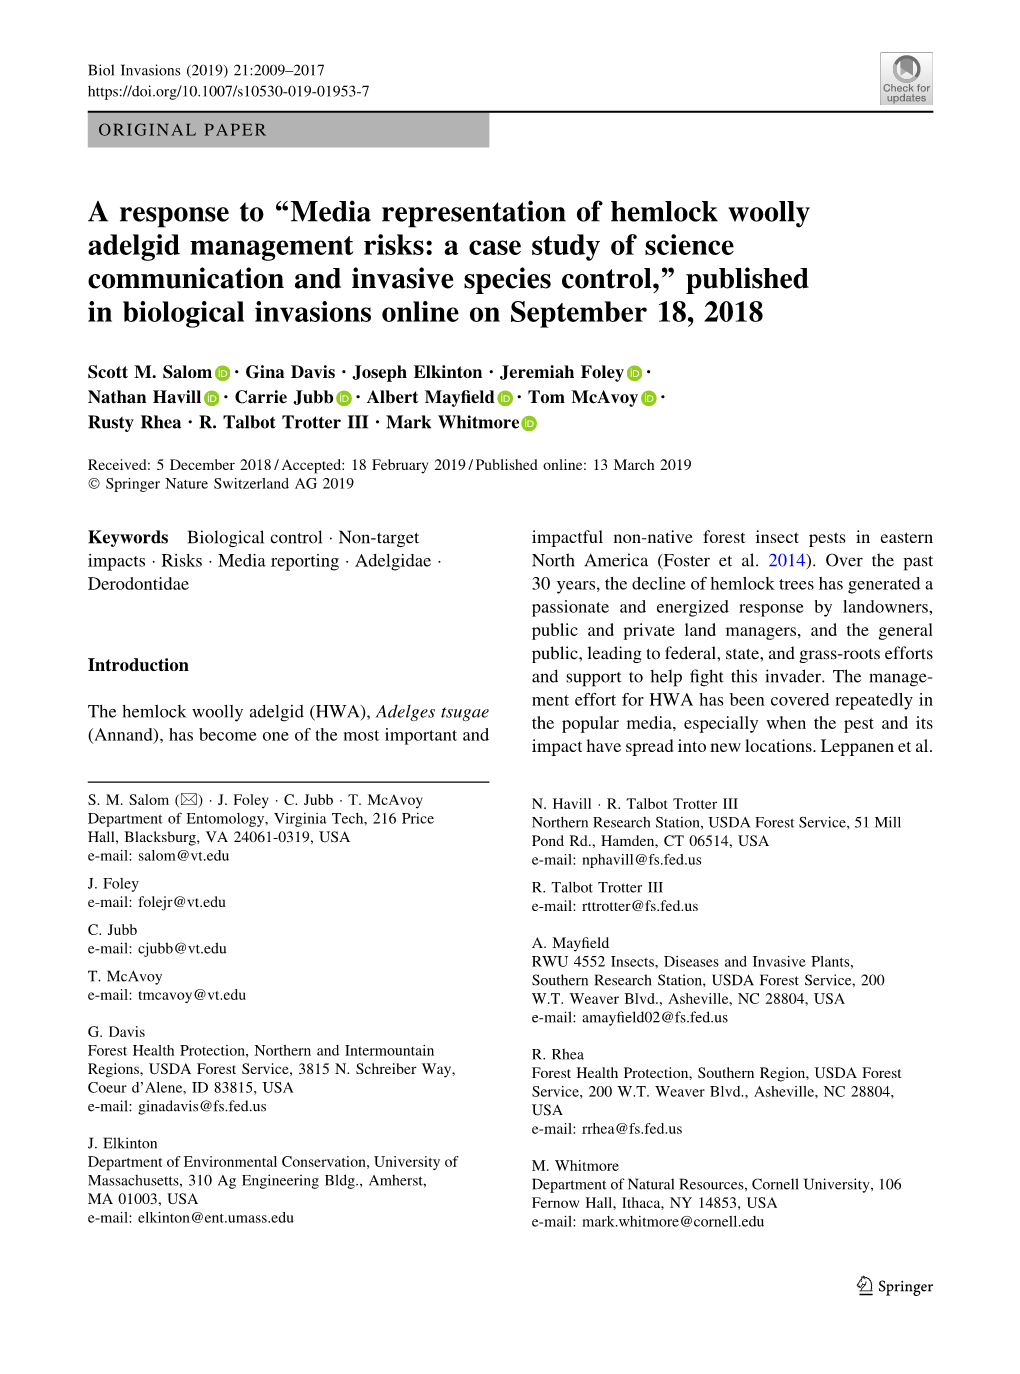 Media Representation of Hemlock Woolly Adelgid Management Risks: A